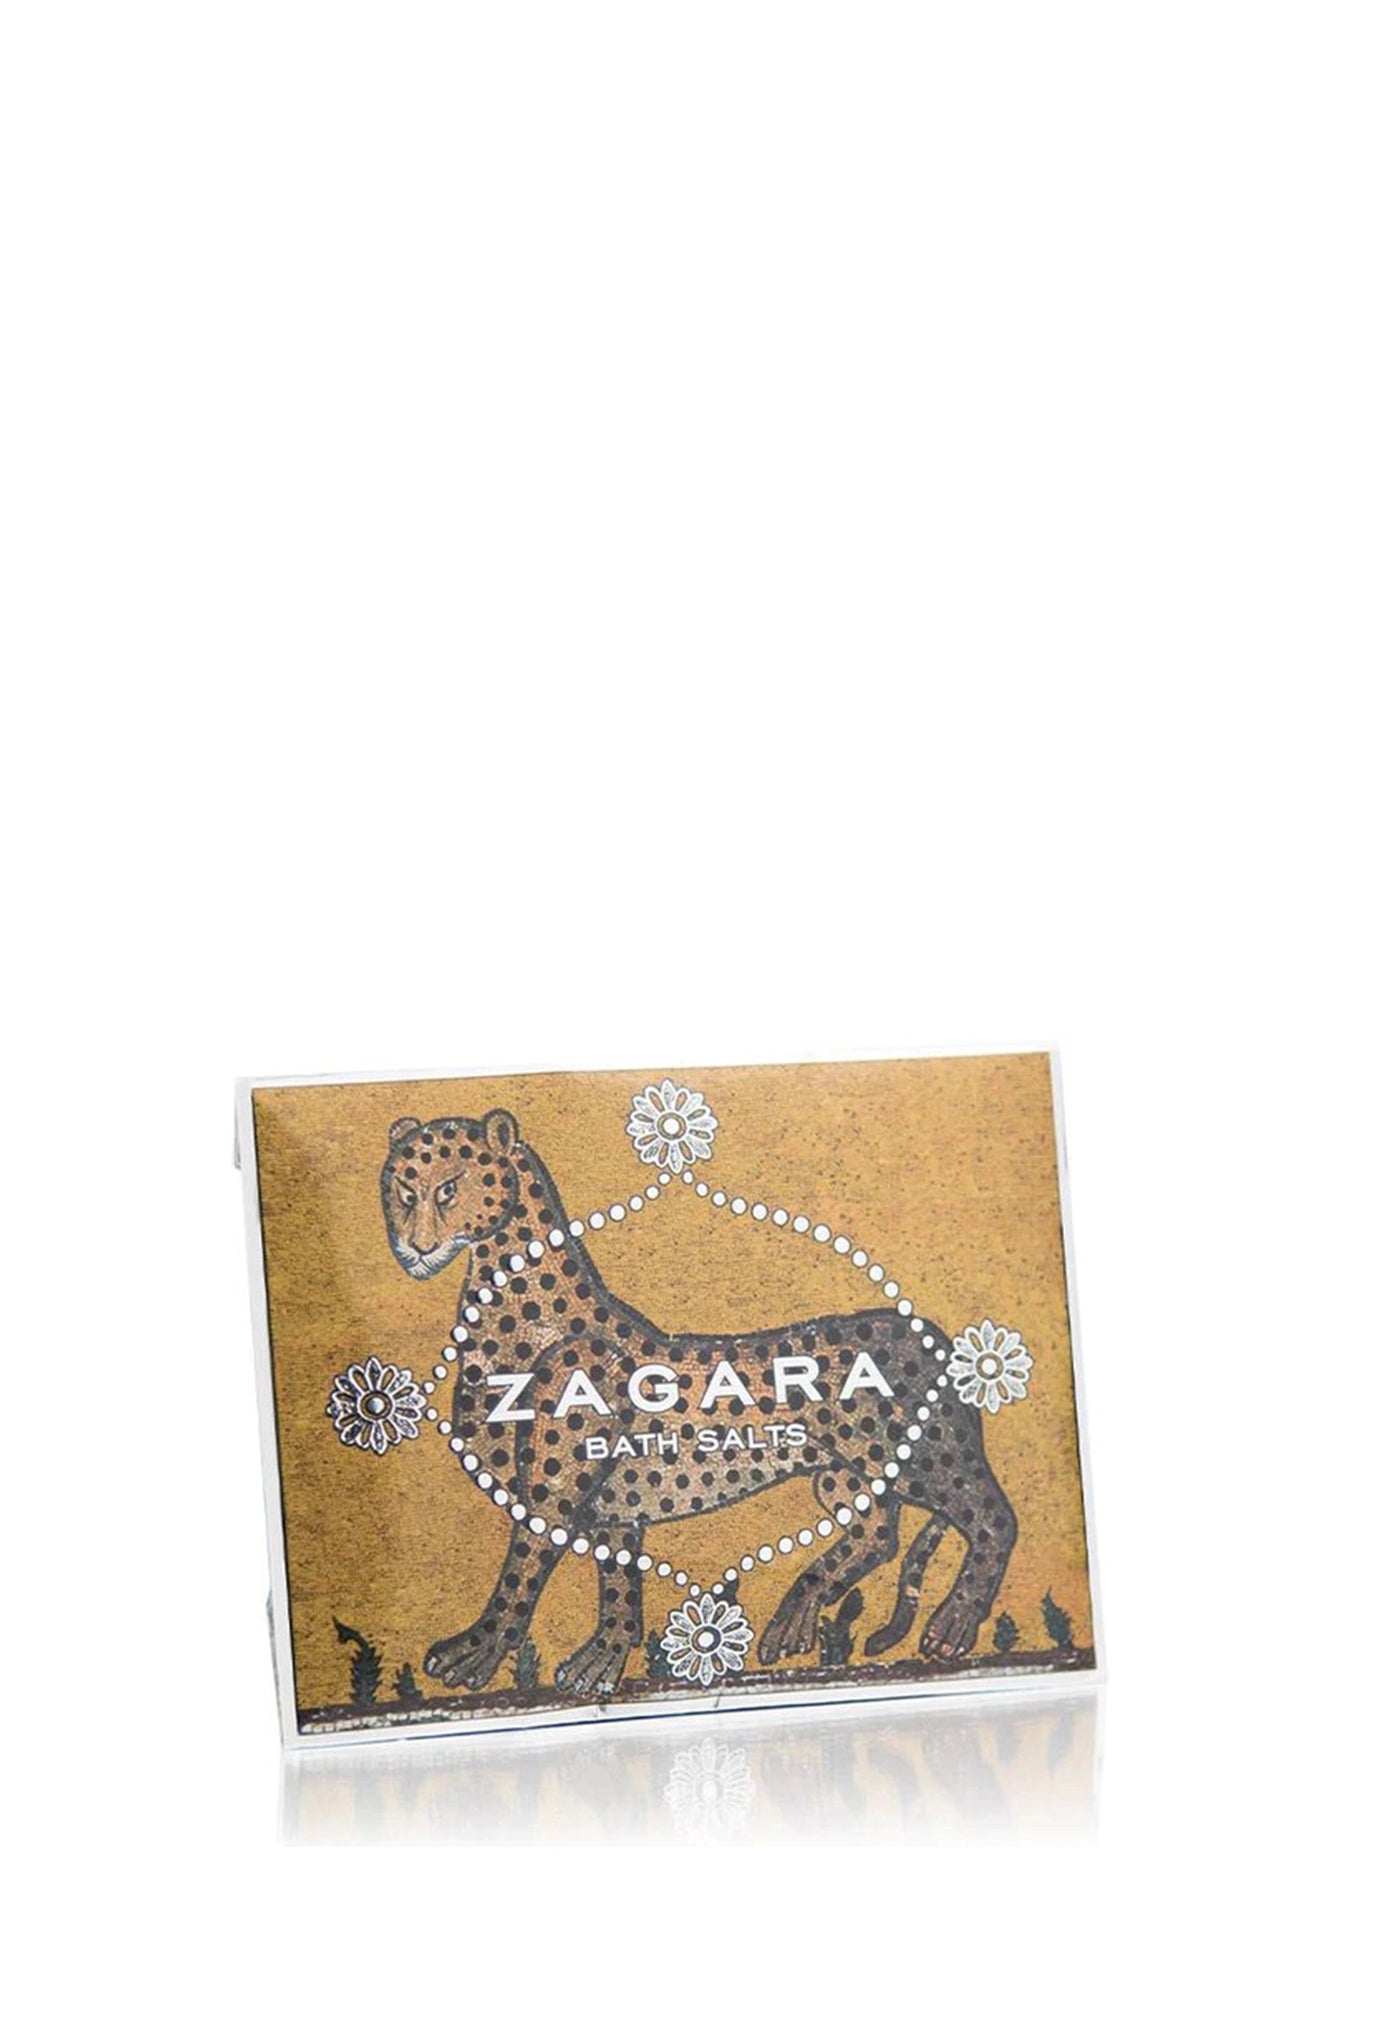 Zagara Bath Salts Sachet 75g sold by Angel Divine